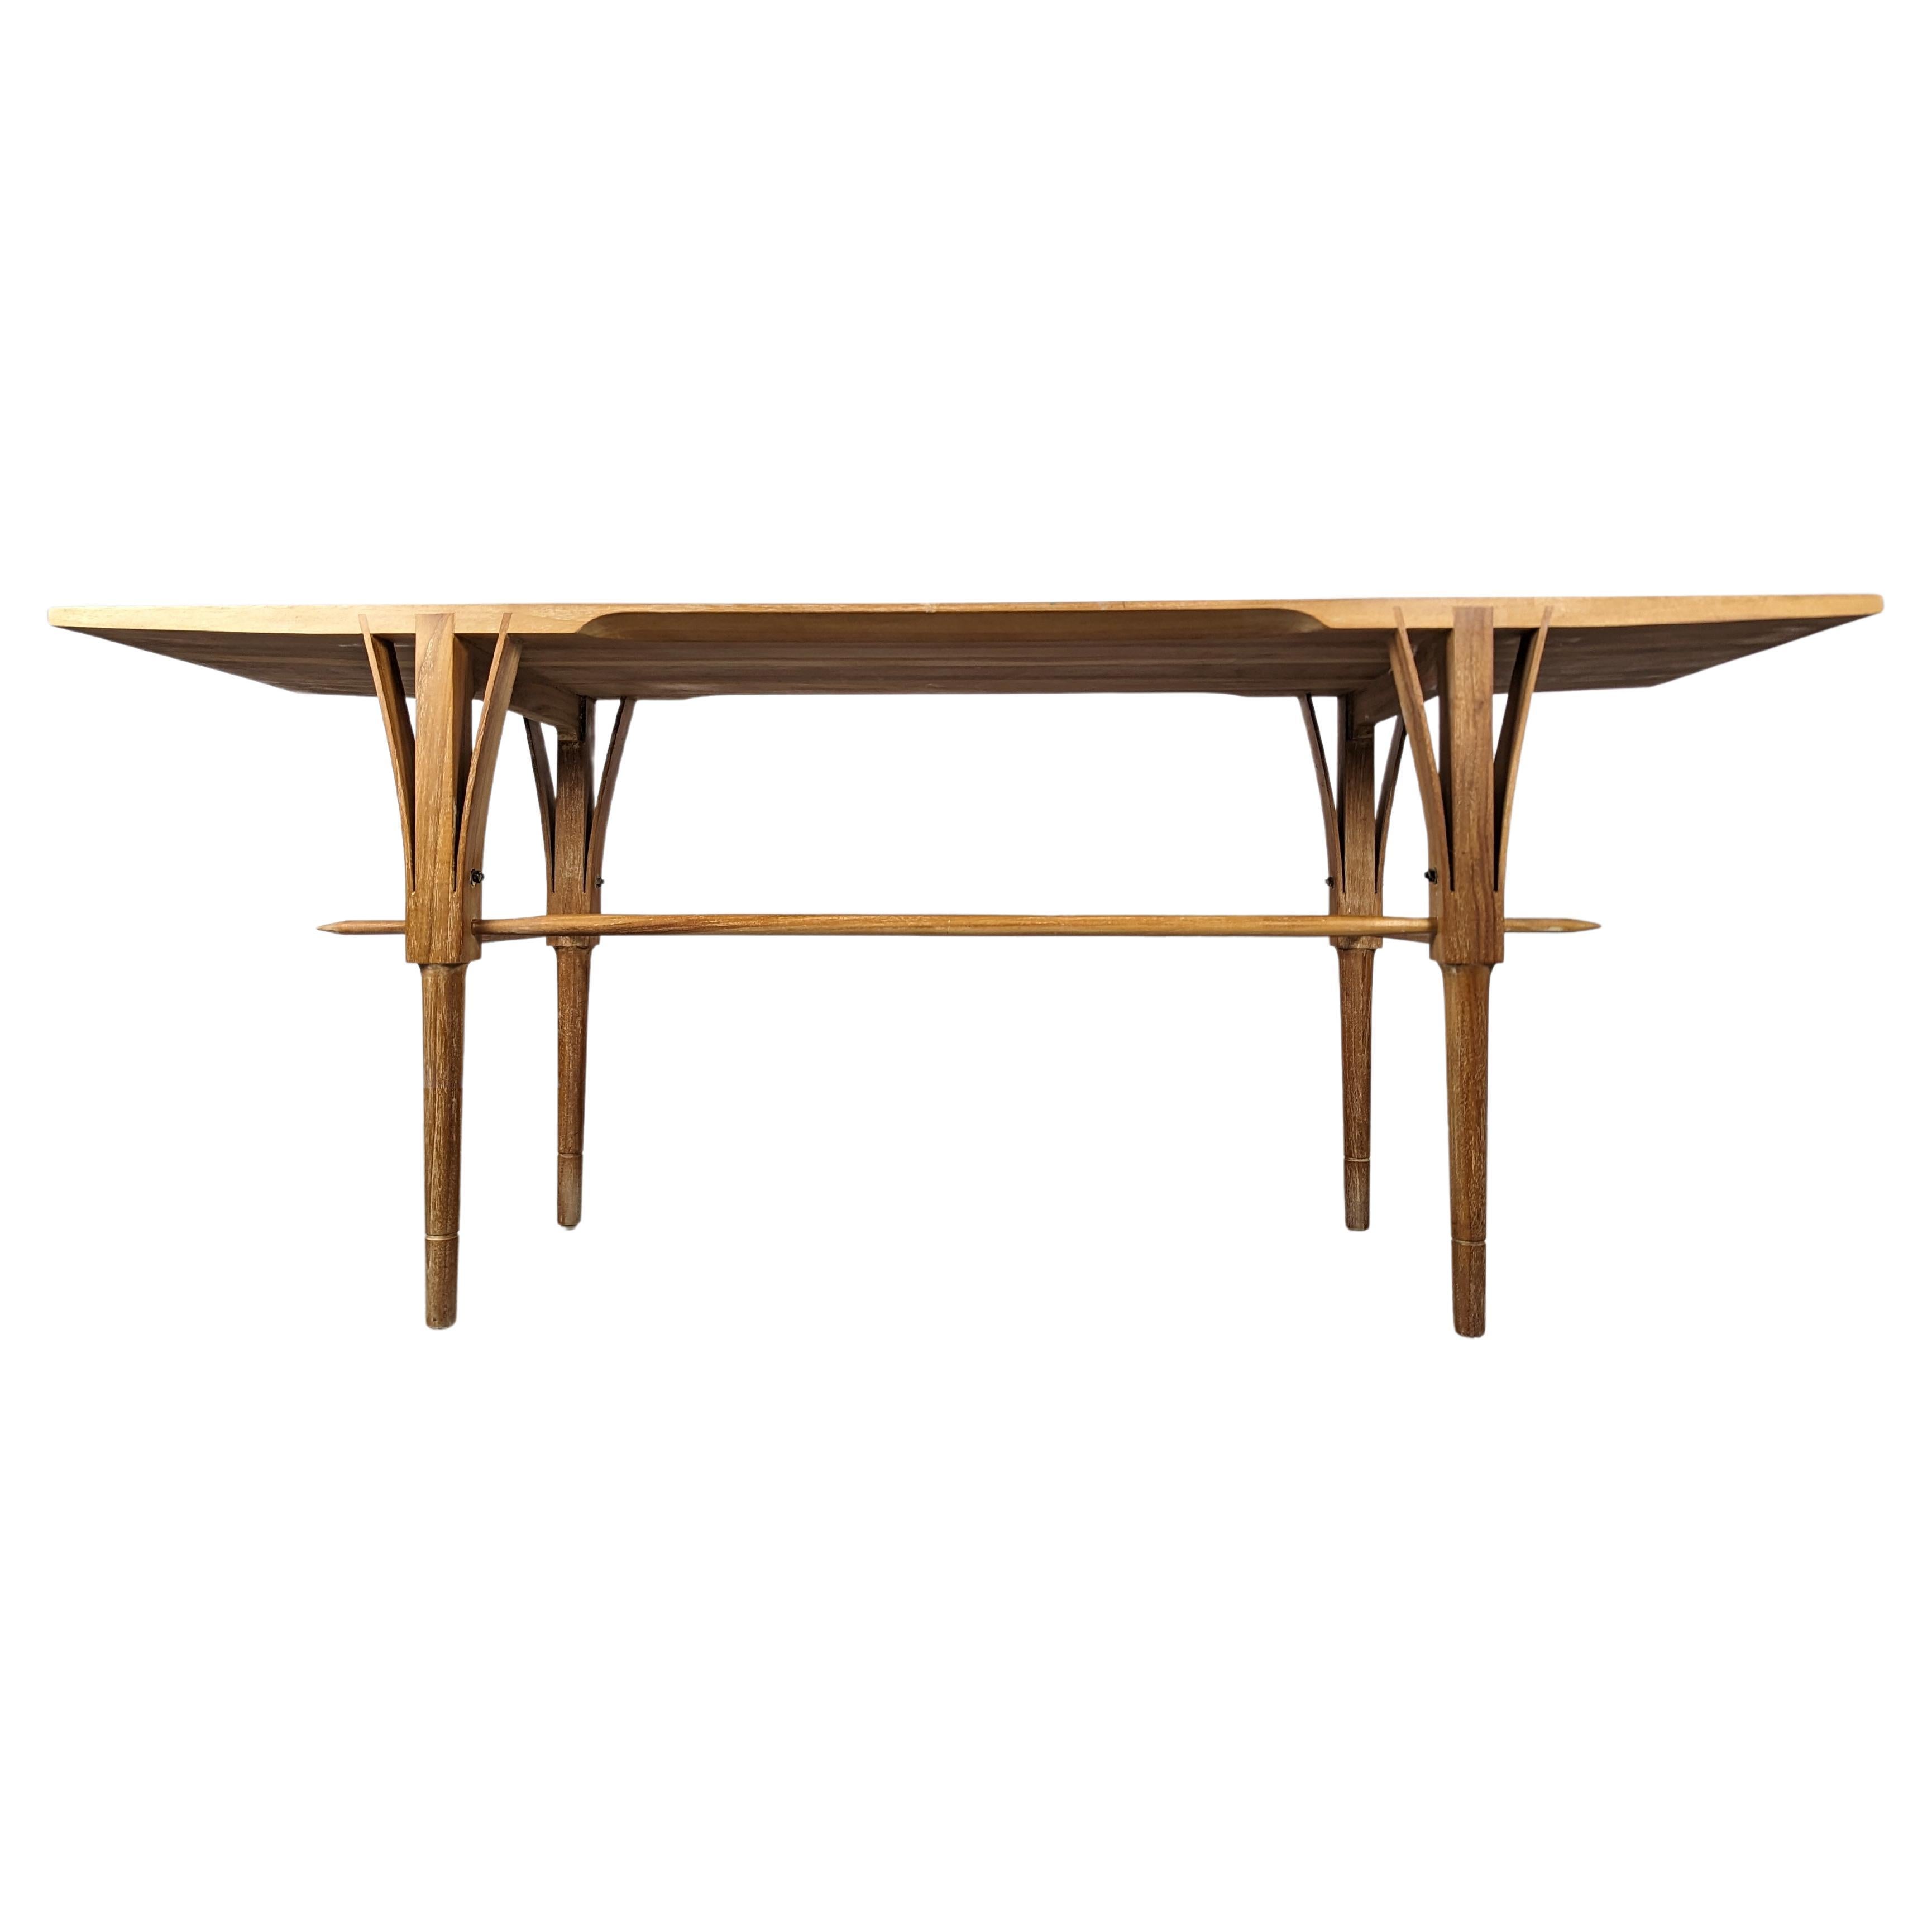 Danish desk table by Sven Ellekaer 1960s